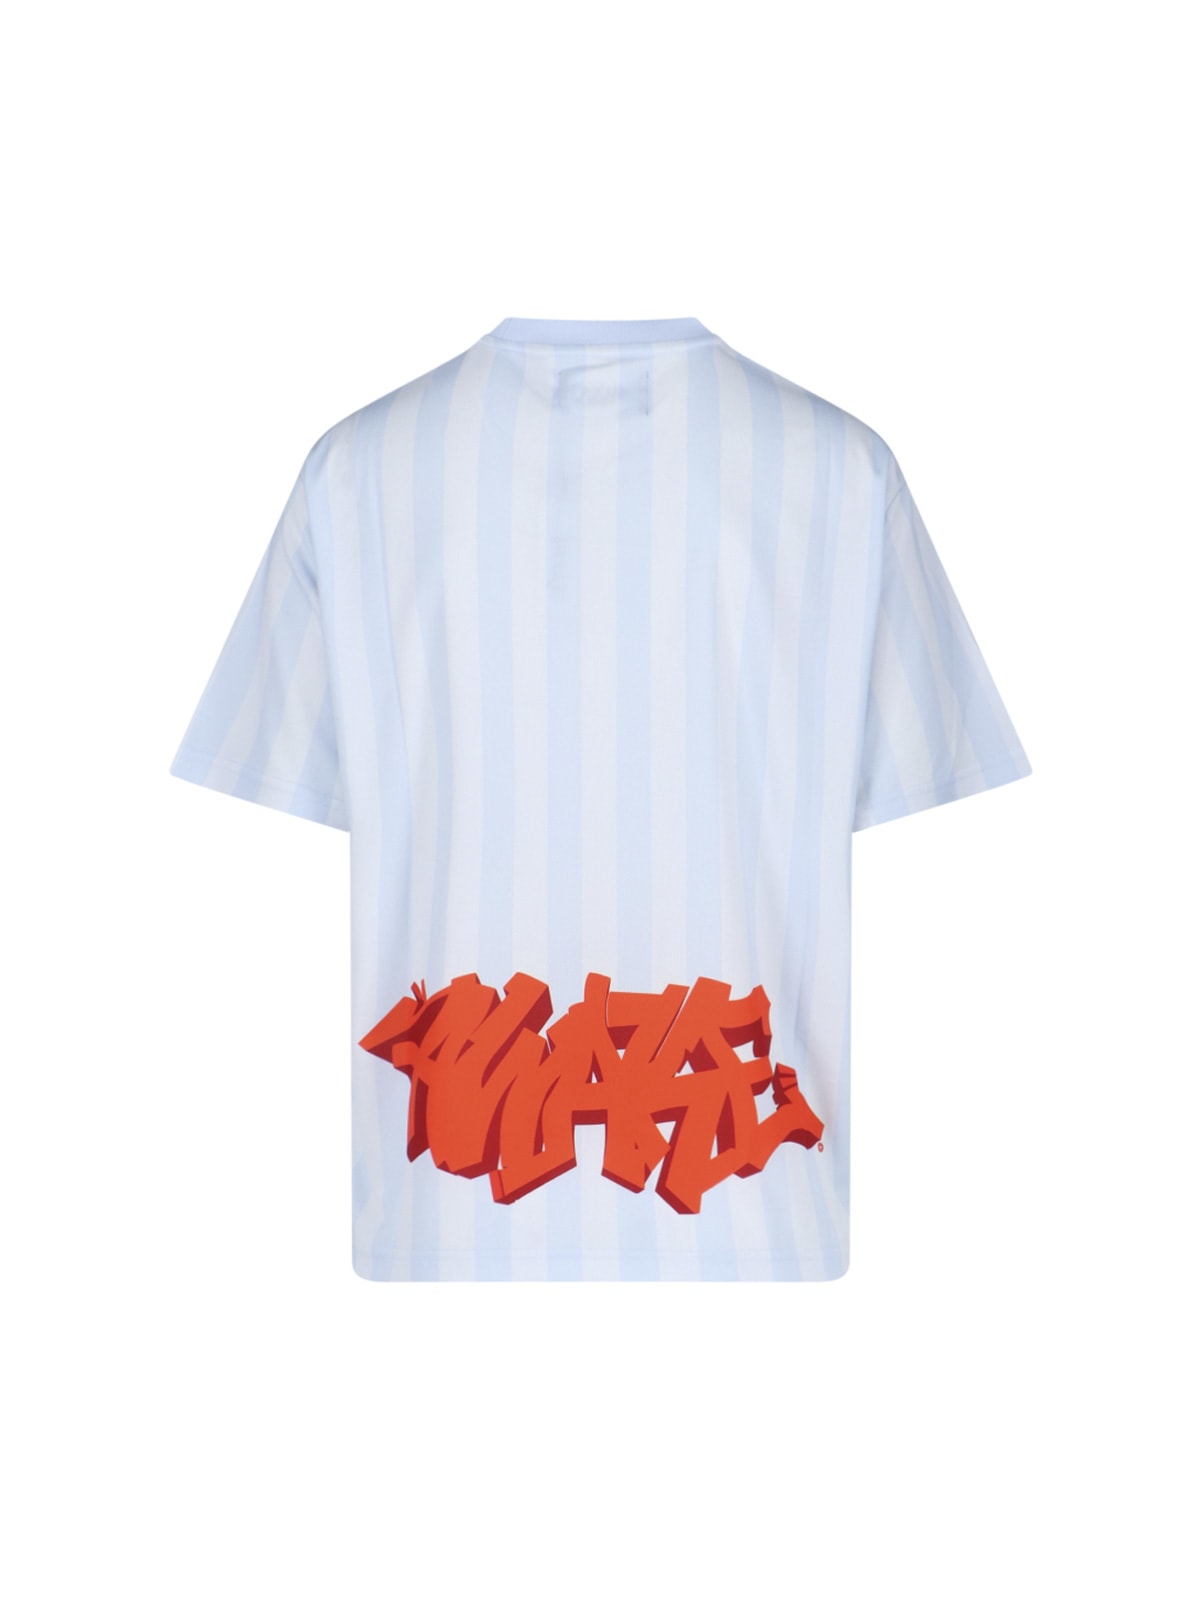 Shop Awake Ny Graffiti Soccer T-shirt In White